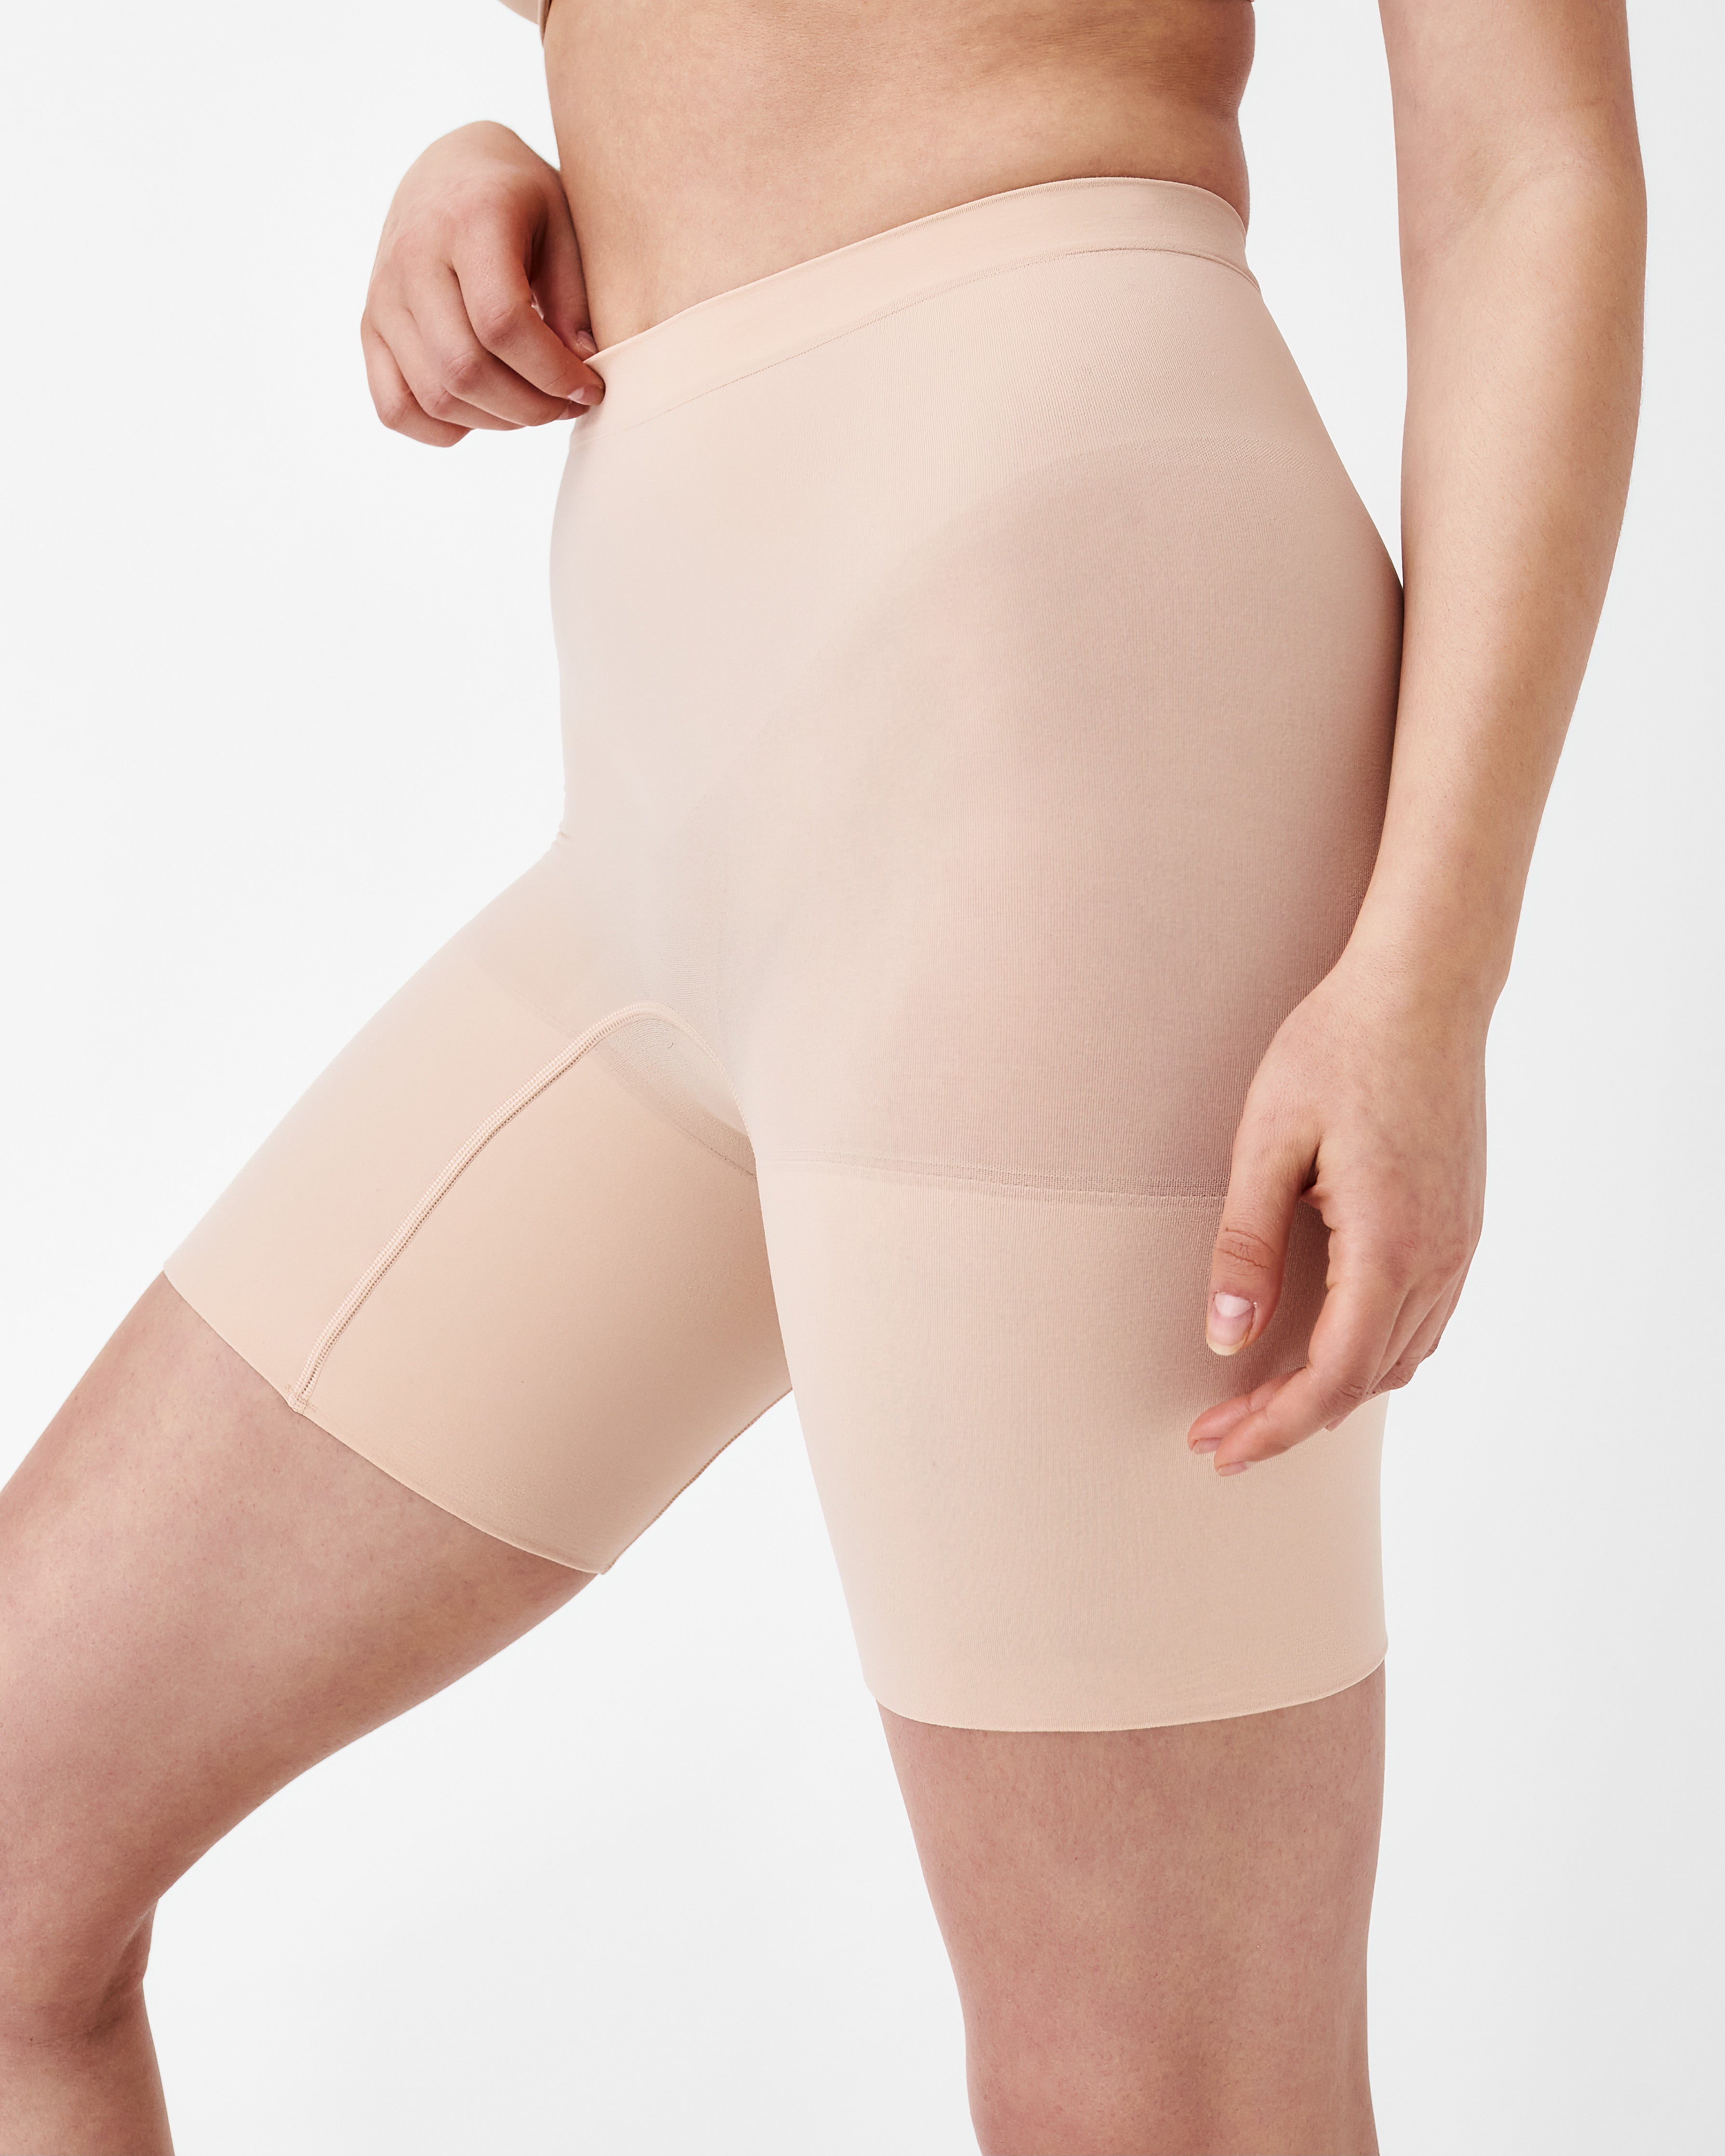 Spanx S1025 Cafe Au Lait Higher Power Tummy Control Higt Waist Shorts Size  3X for sale online